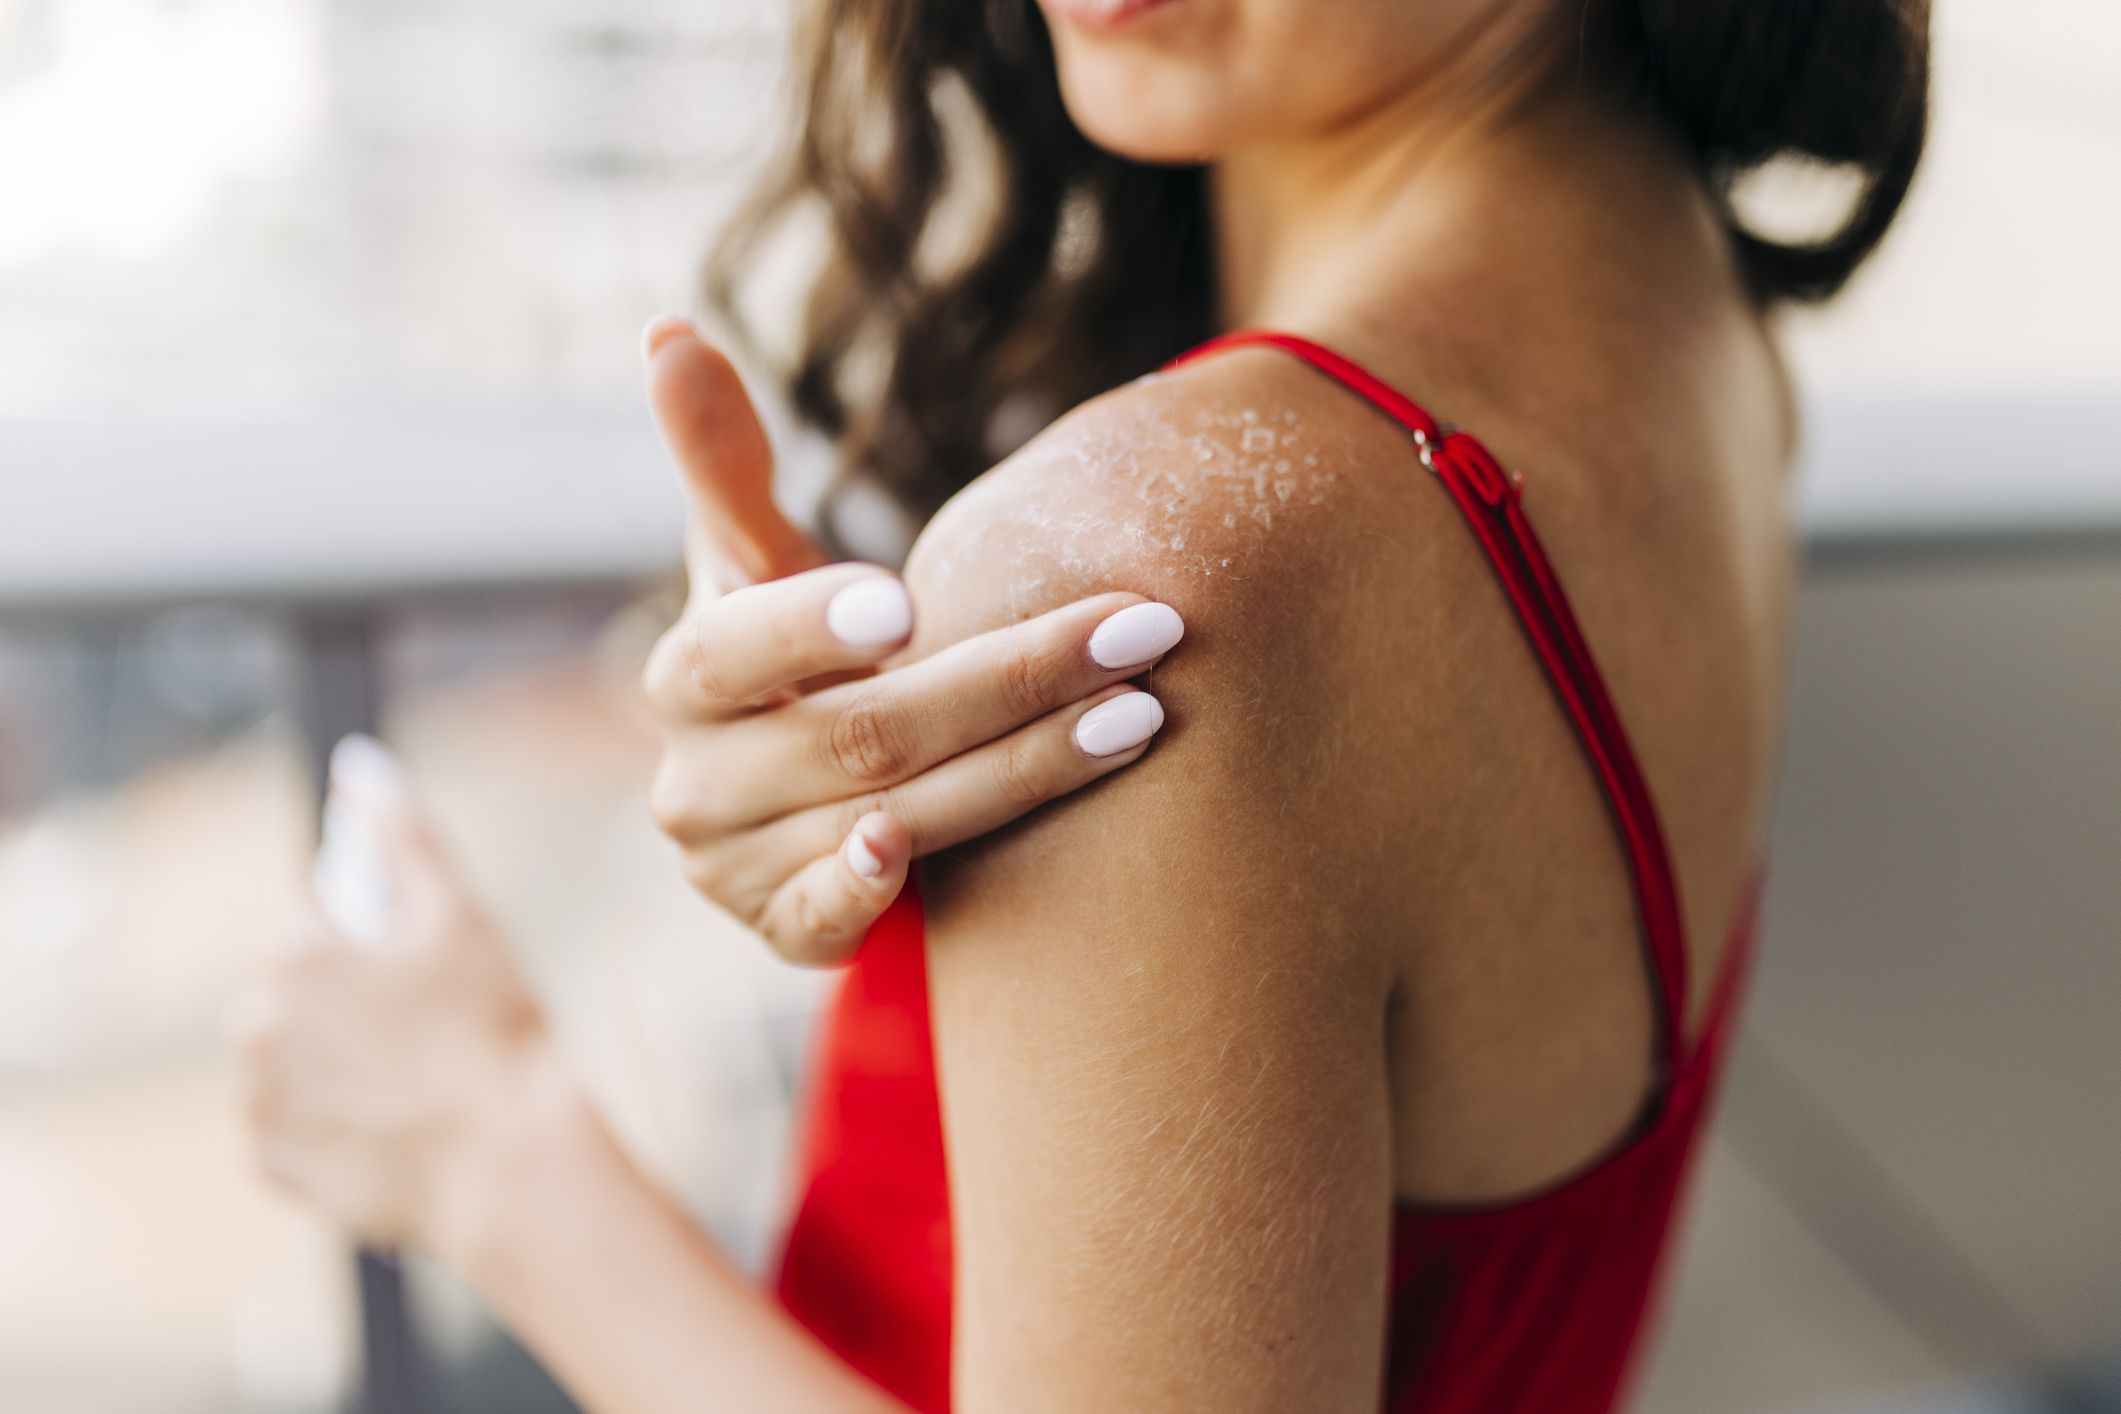 Heat rash, prickly heat, dermatitis and eczema can cause summer